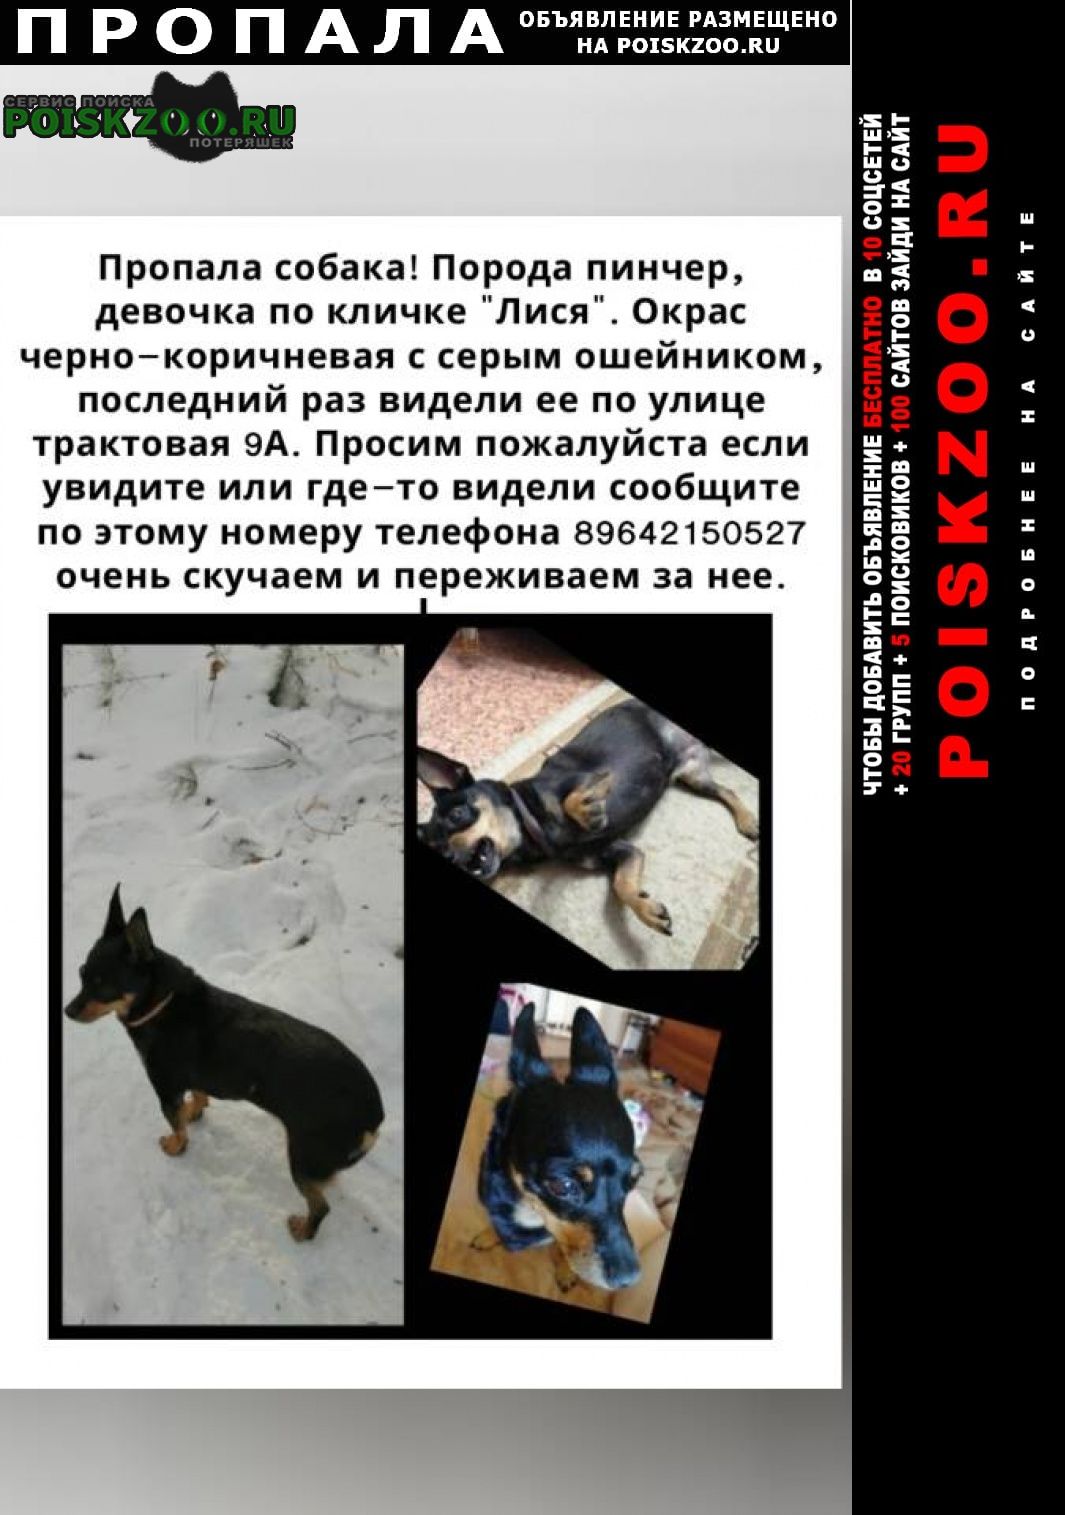 Пропала собака Иркутск